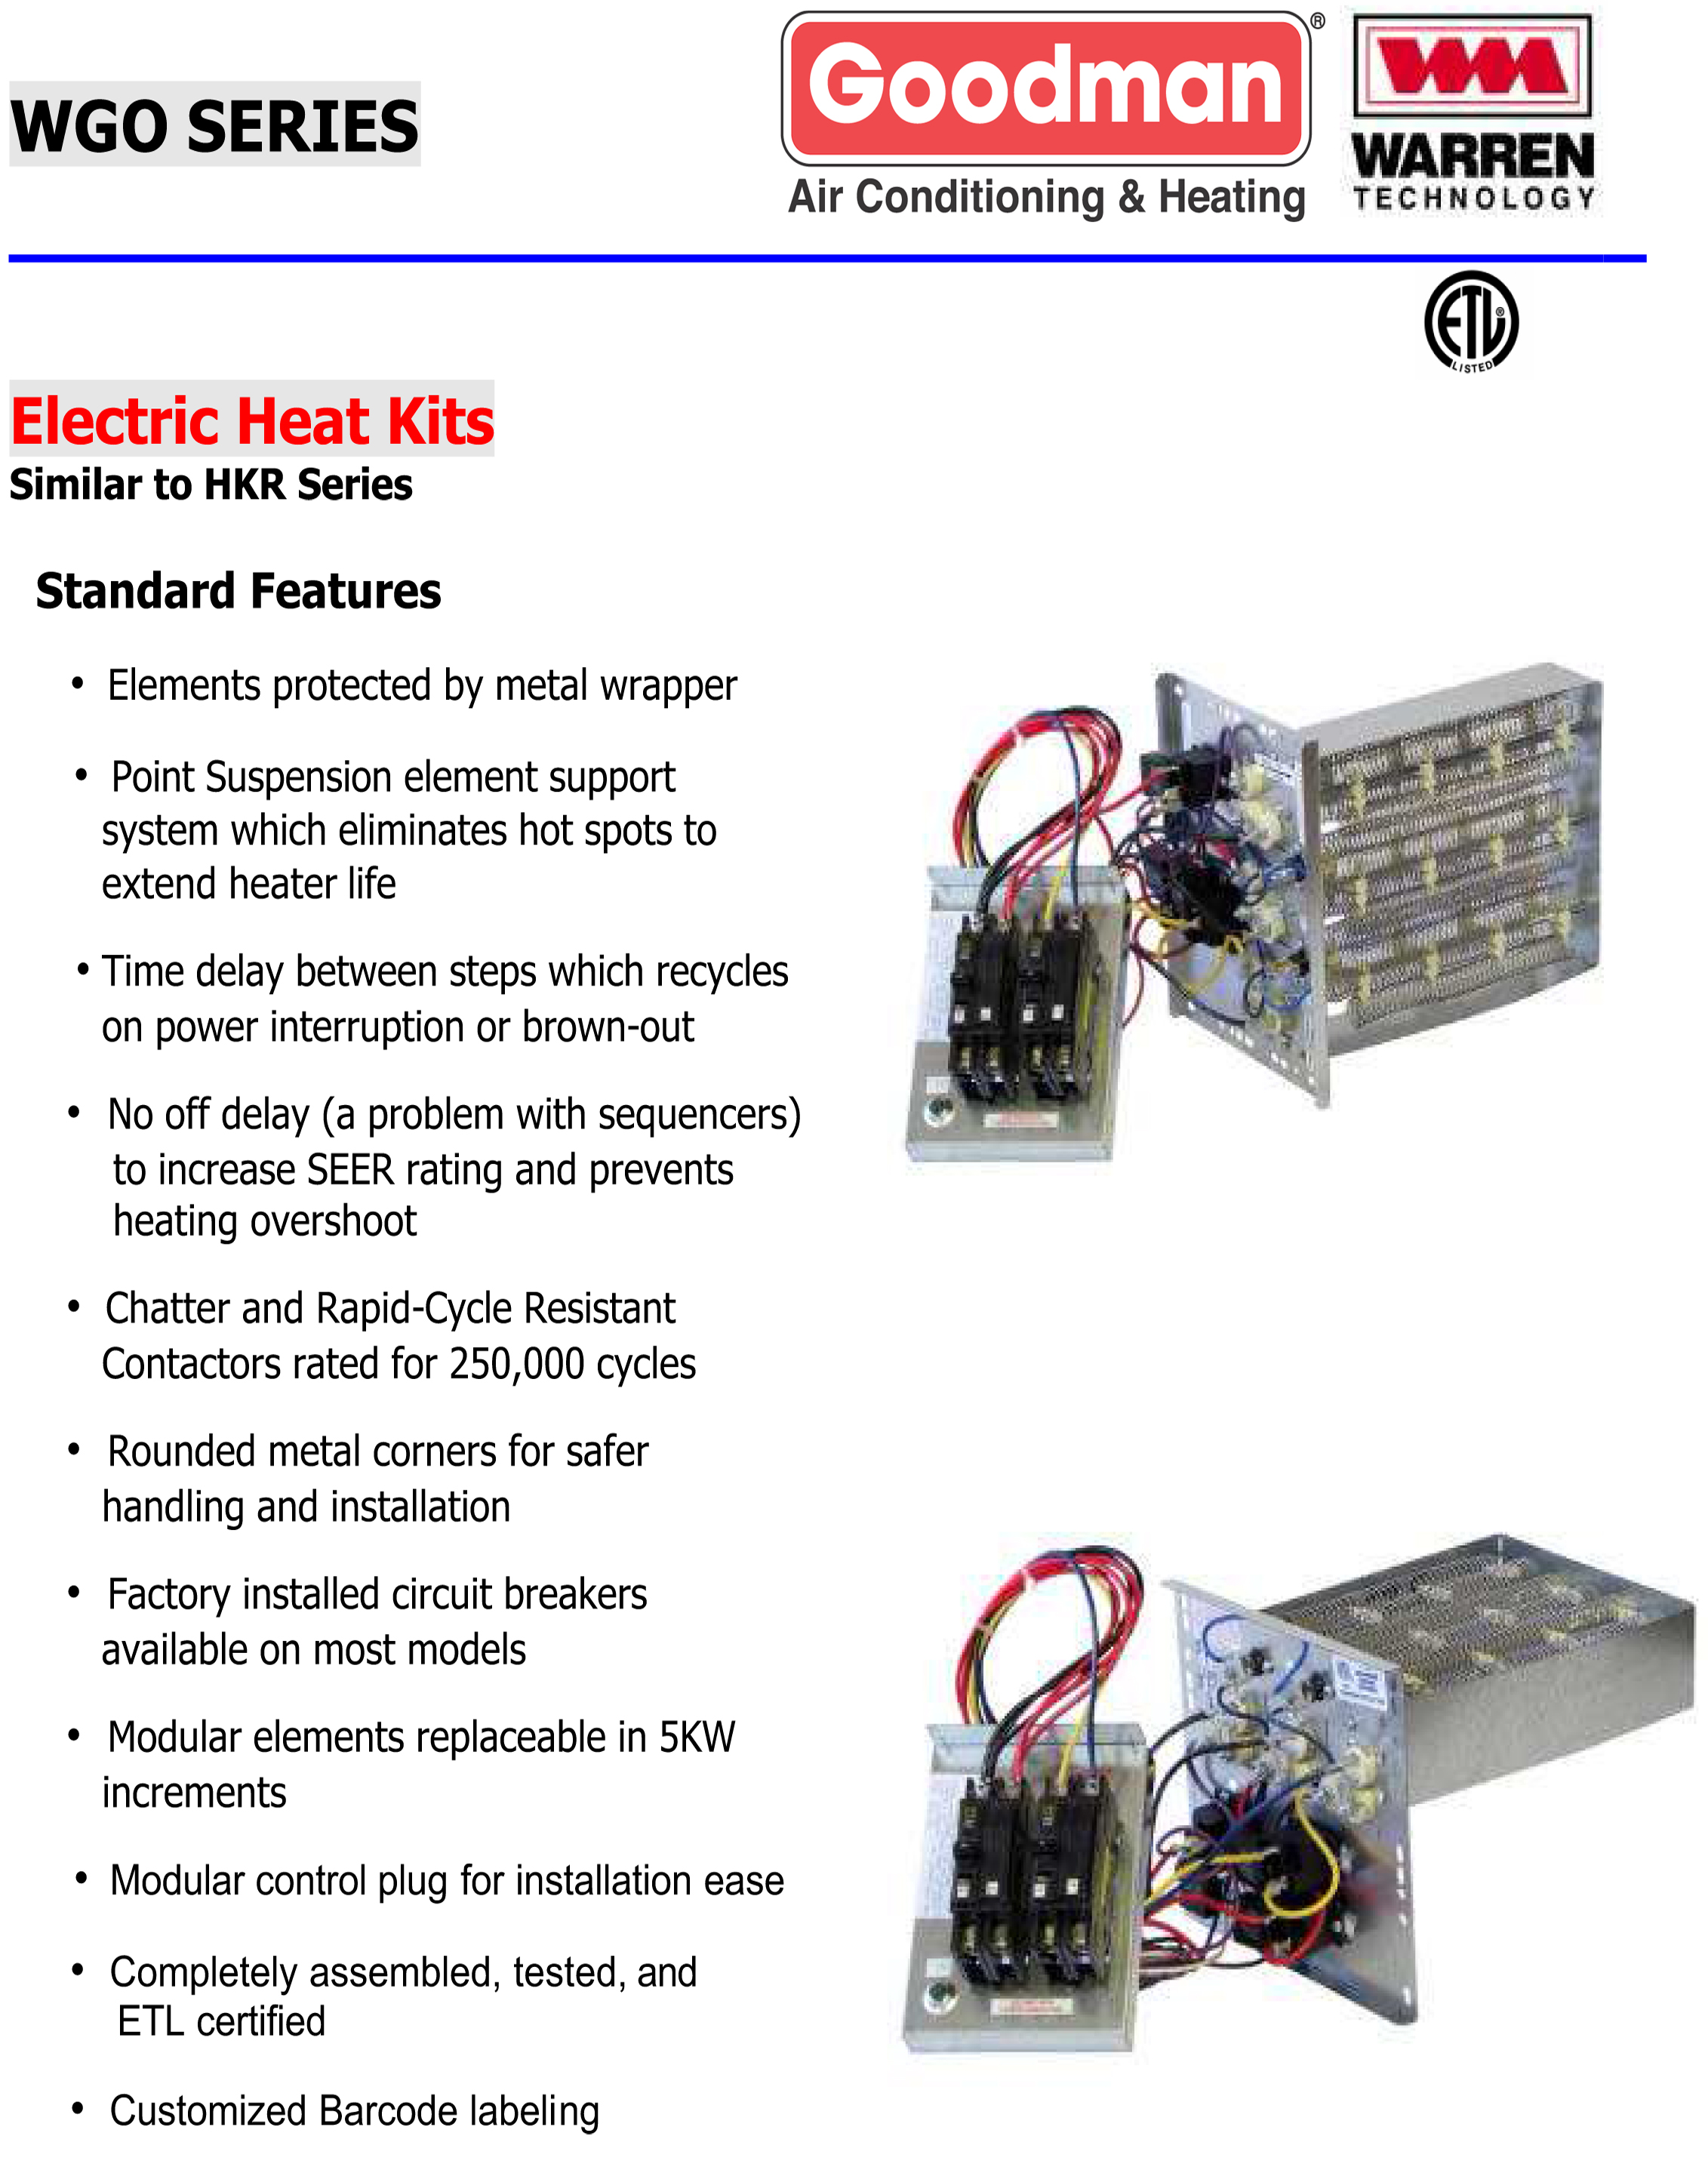 Electric strip heater kits